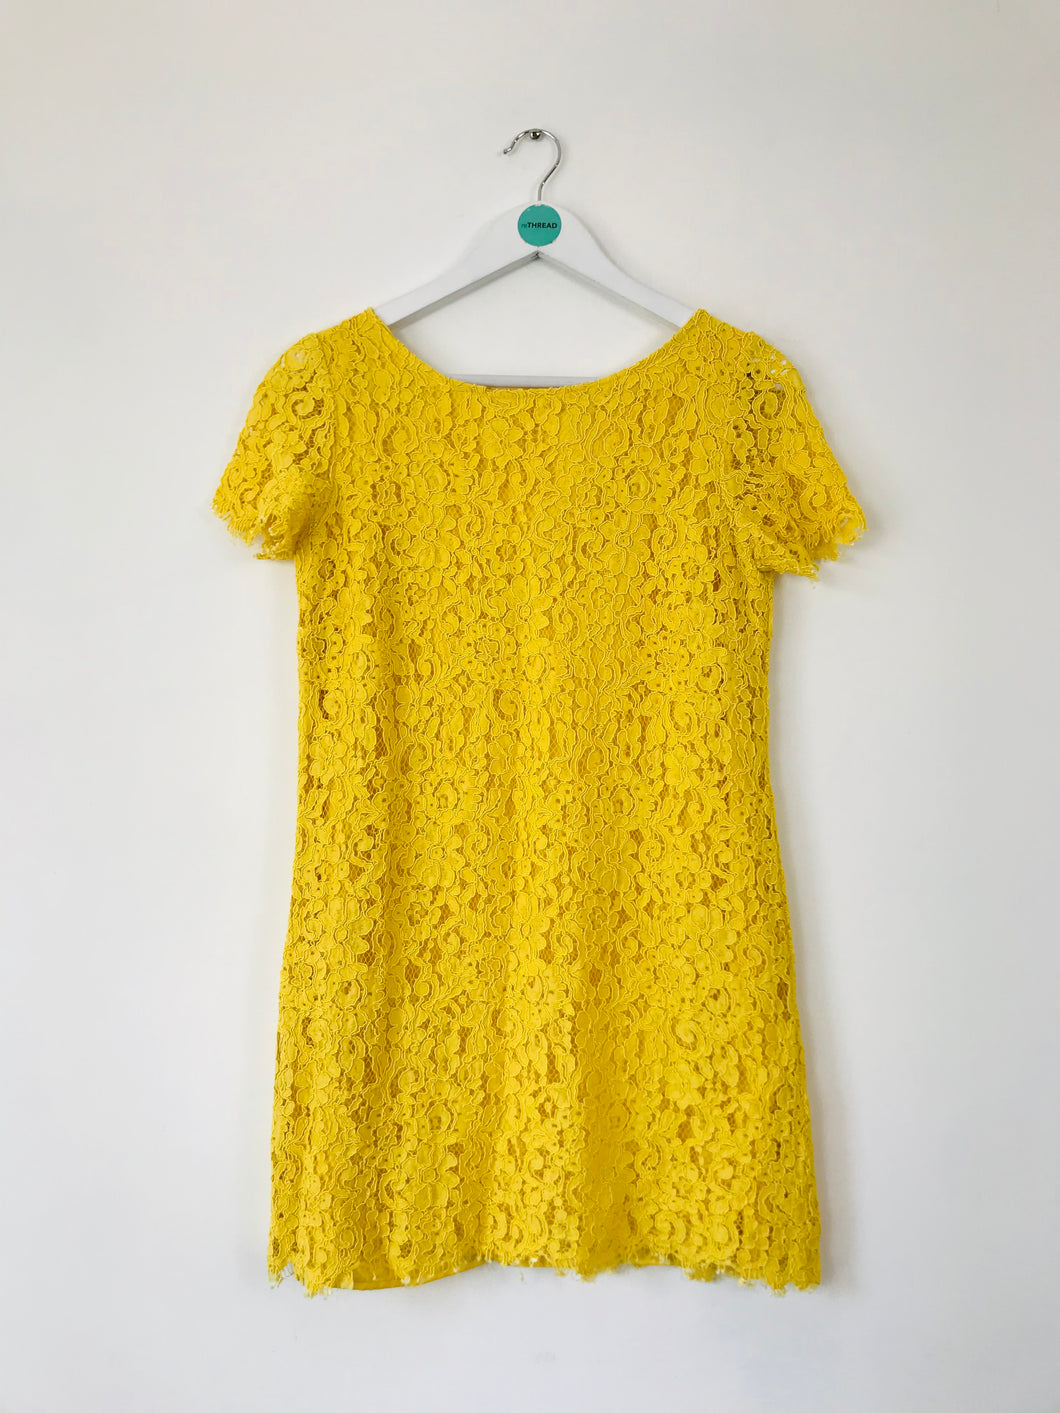 Zara Women’s Lace Shirt Dress | M UK10 | Yellow